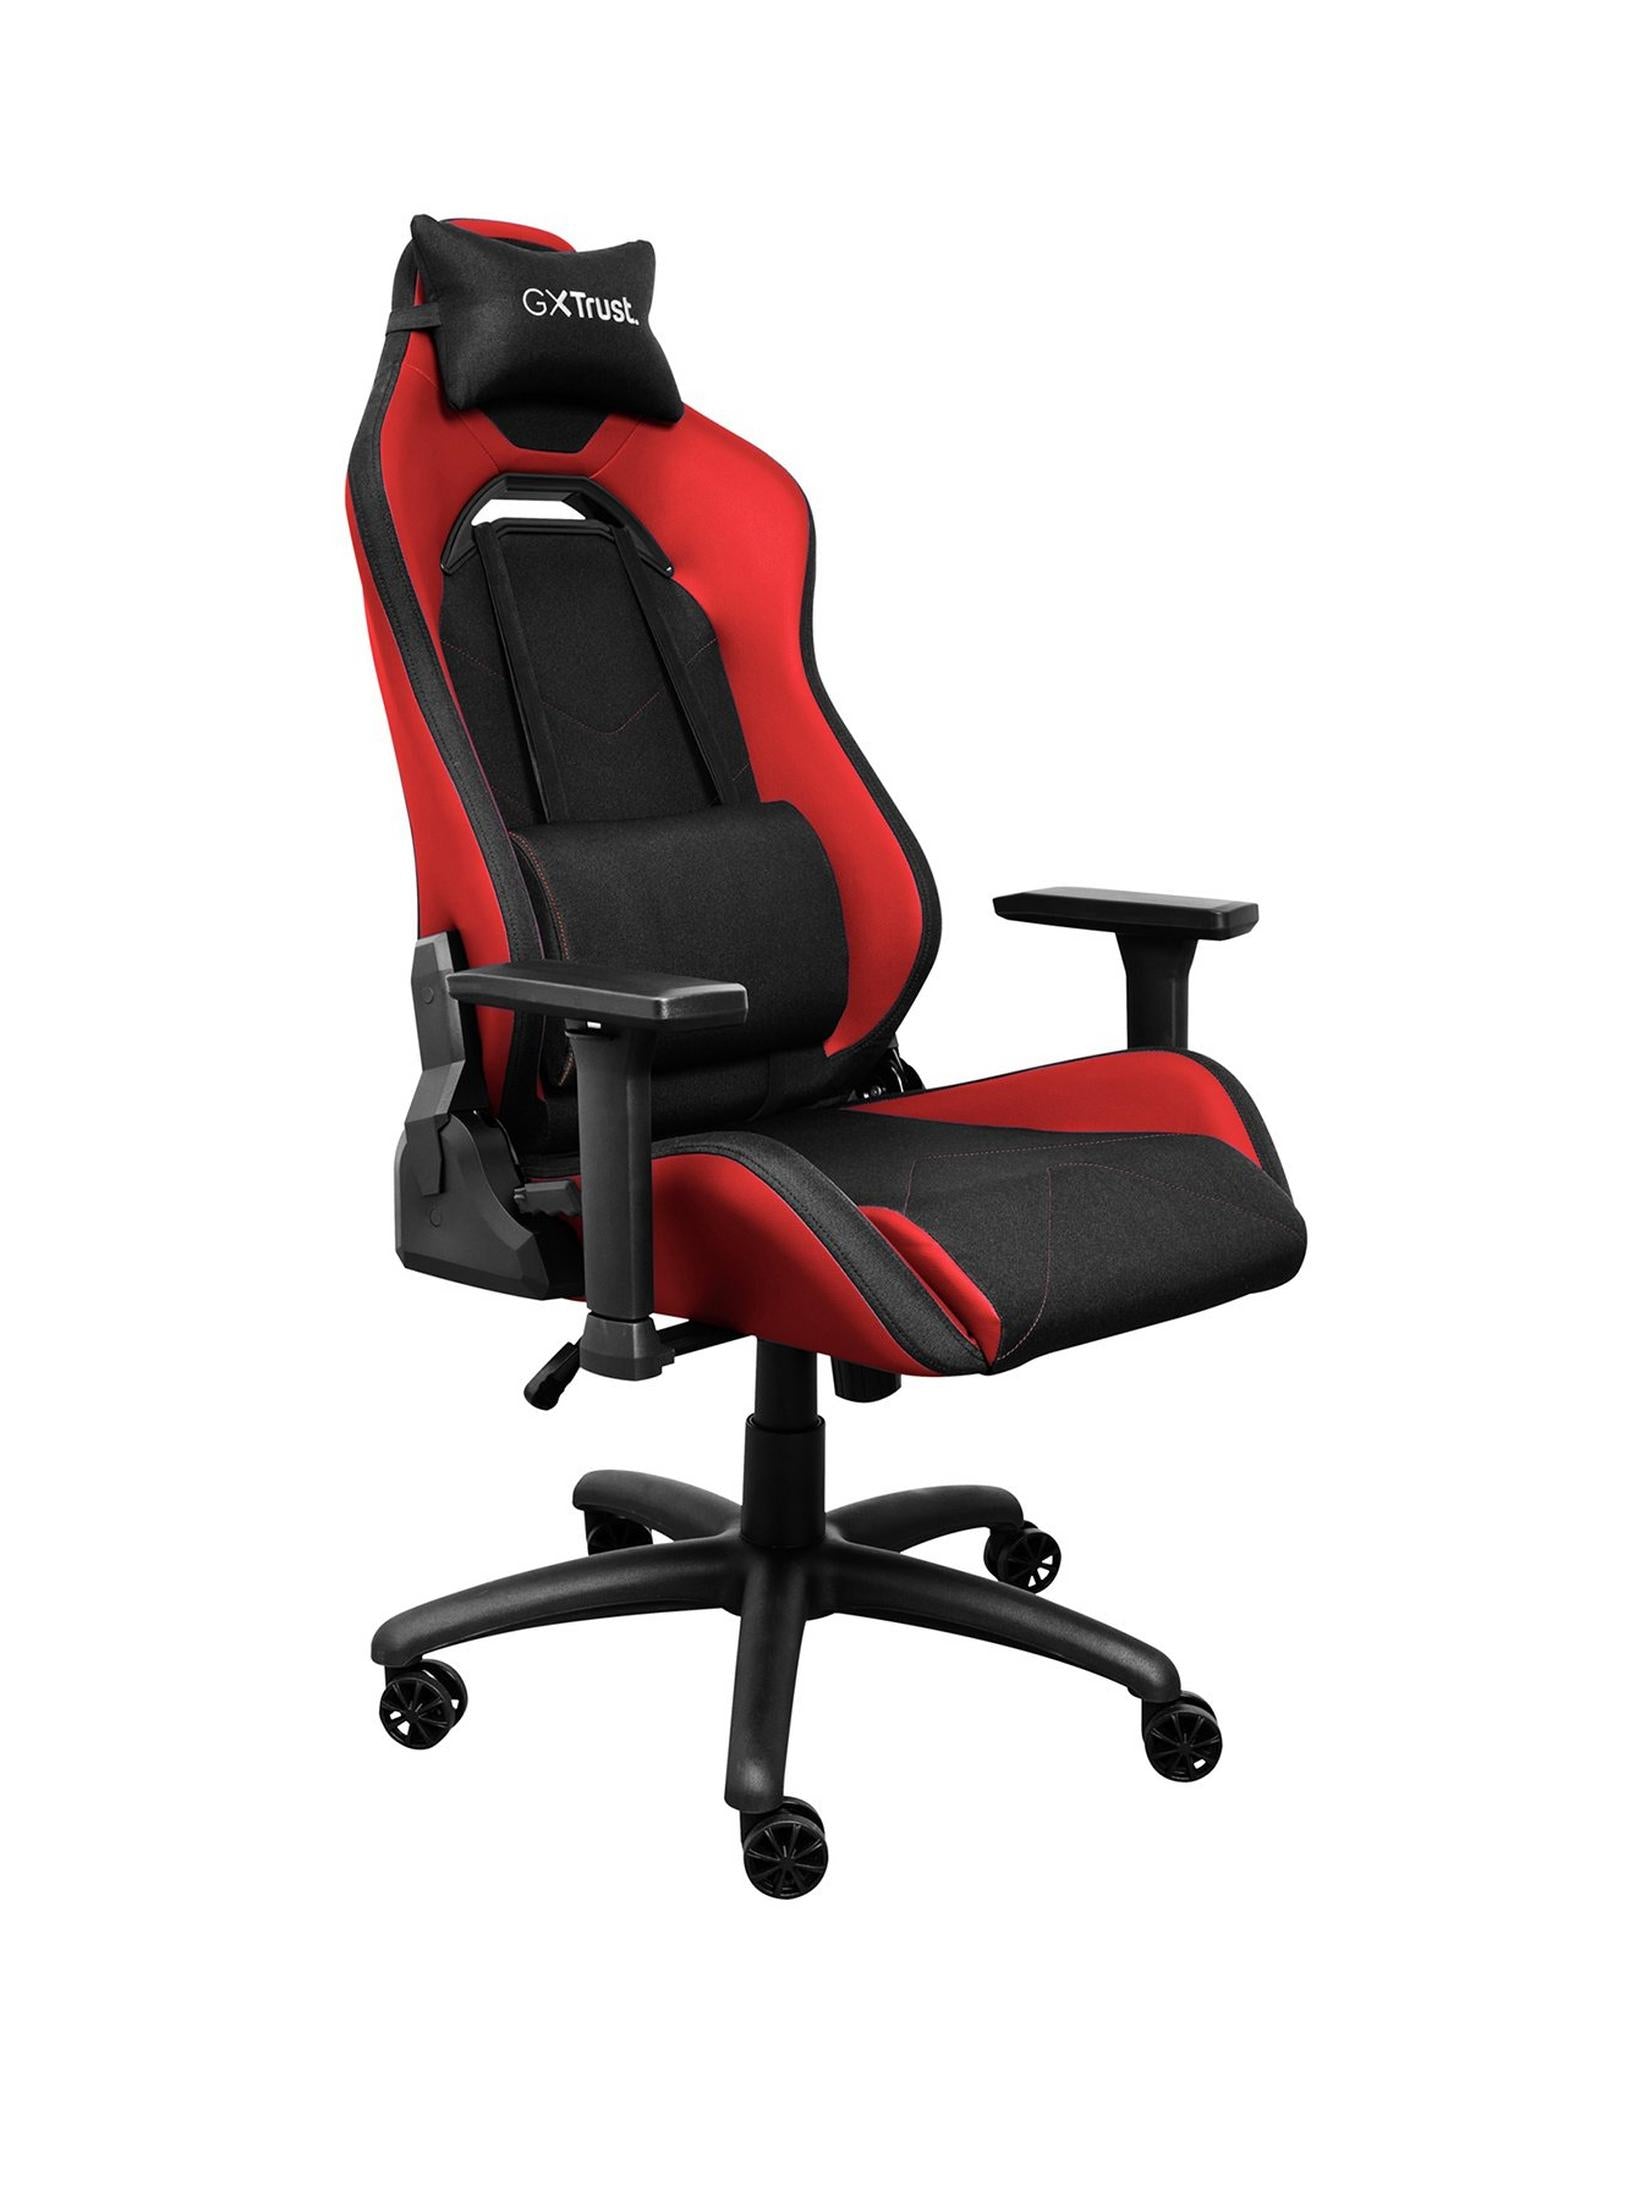 Trust GXT 714 Ruya Gaming Chair - Red